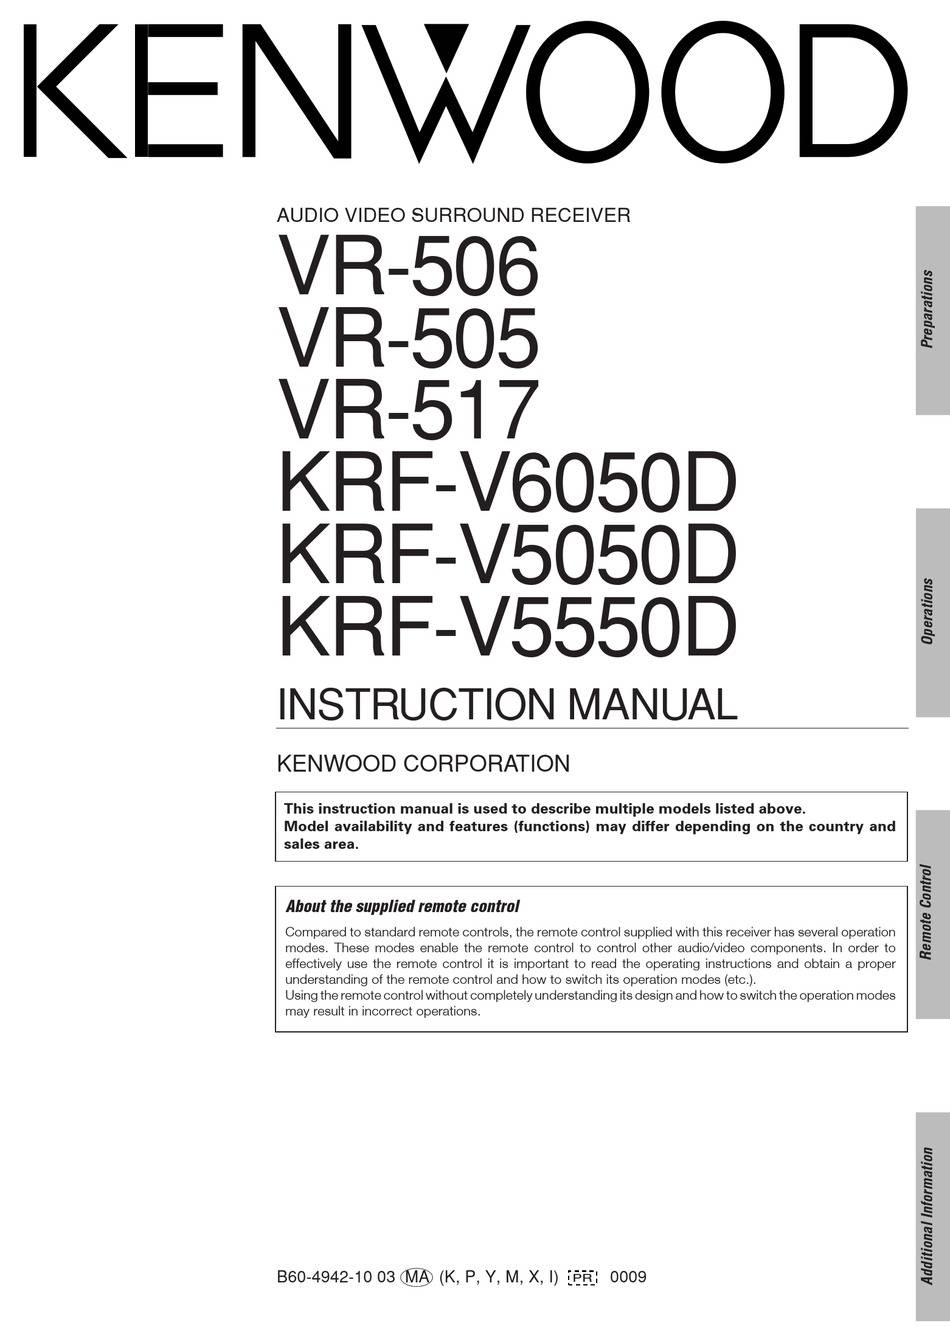 Kenwood KRF-V6050D